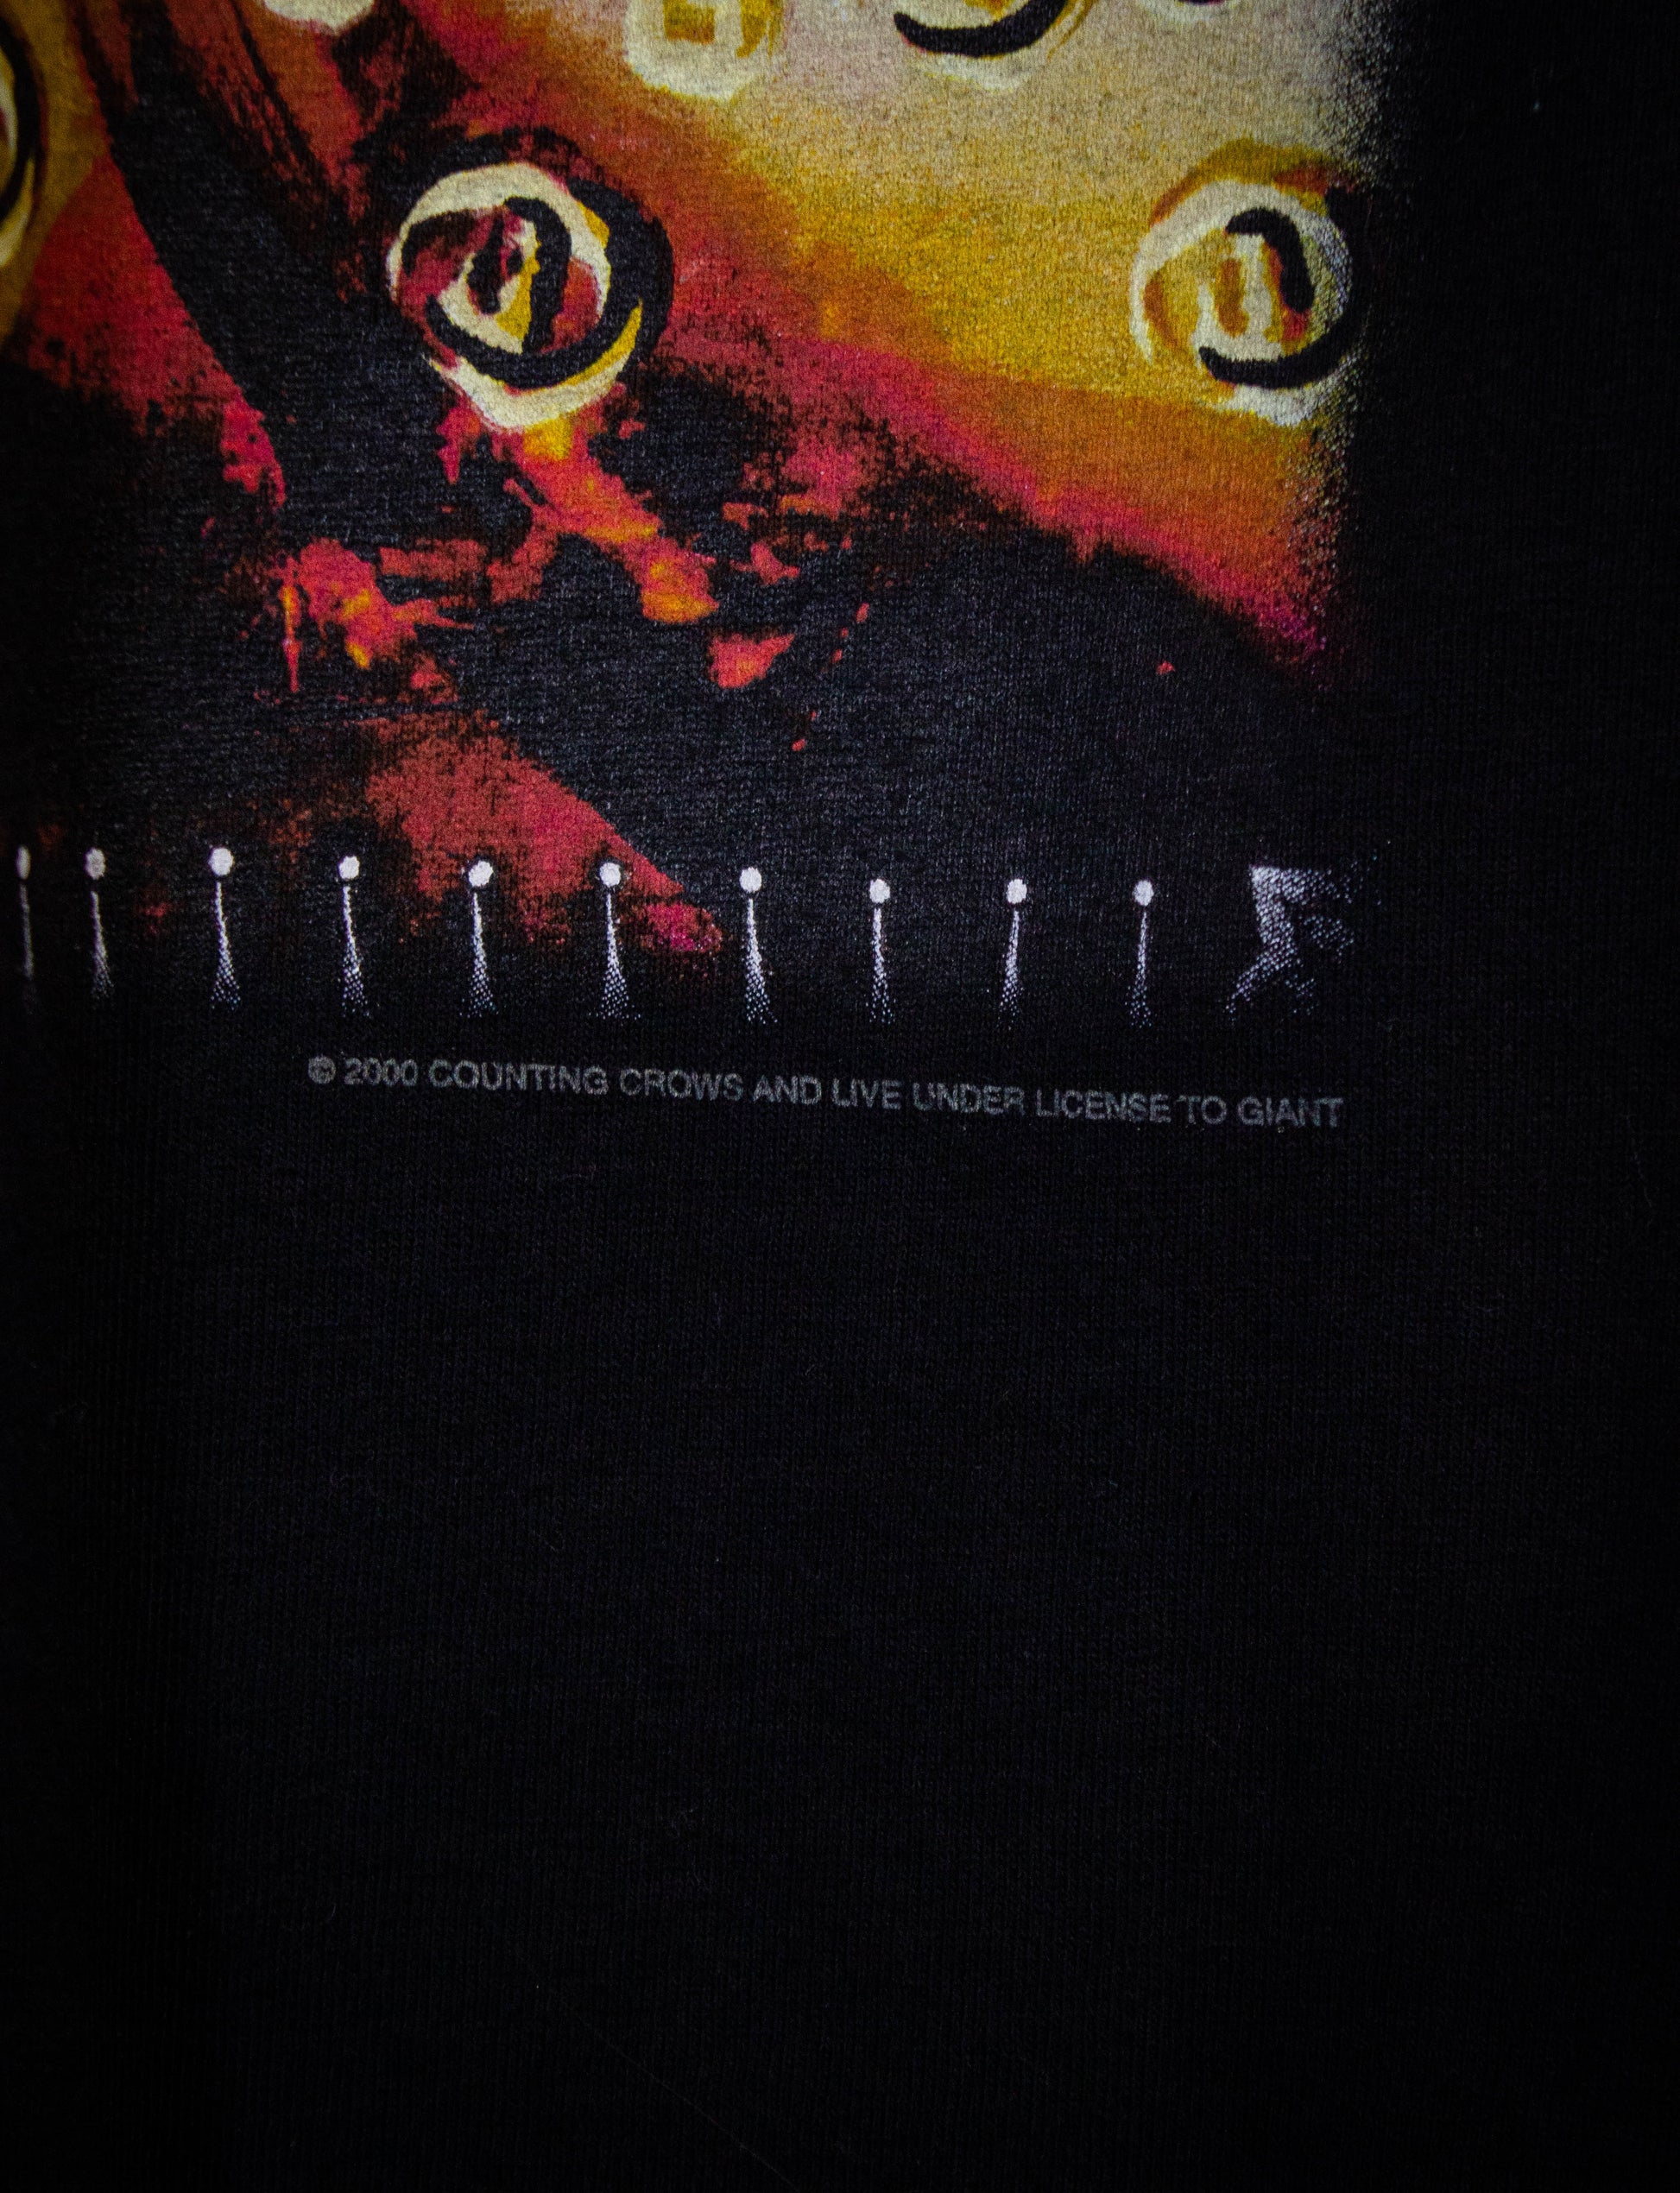 Vintage Counting Crows Summer Tour Concert T Shirt 2000 Black XL